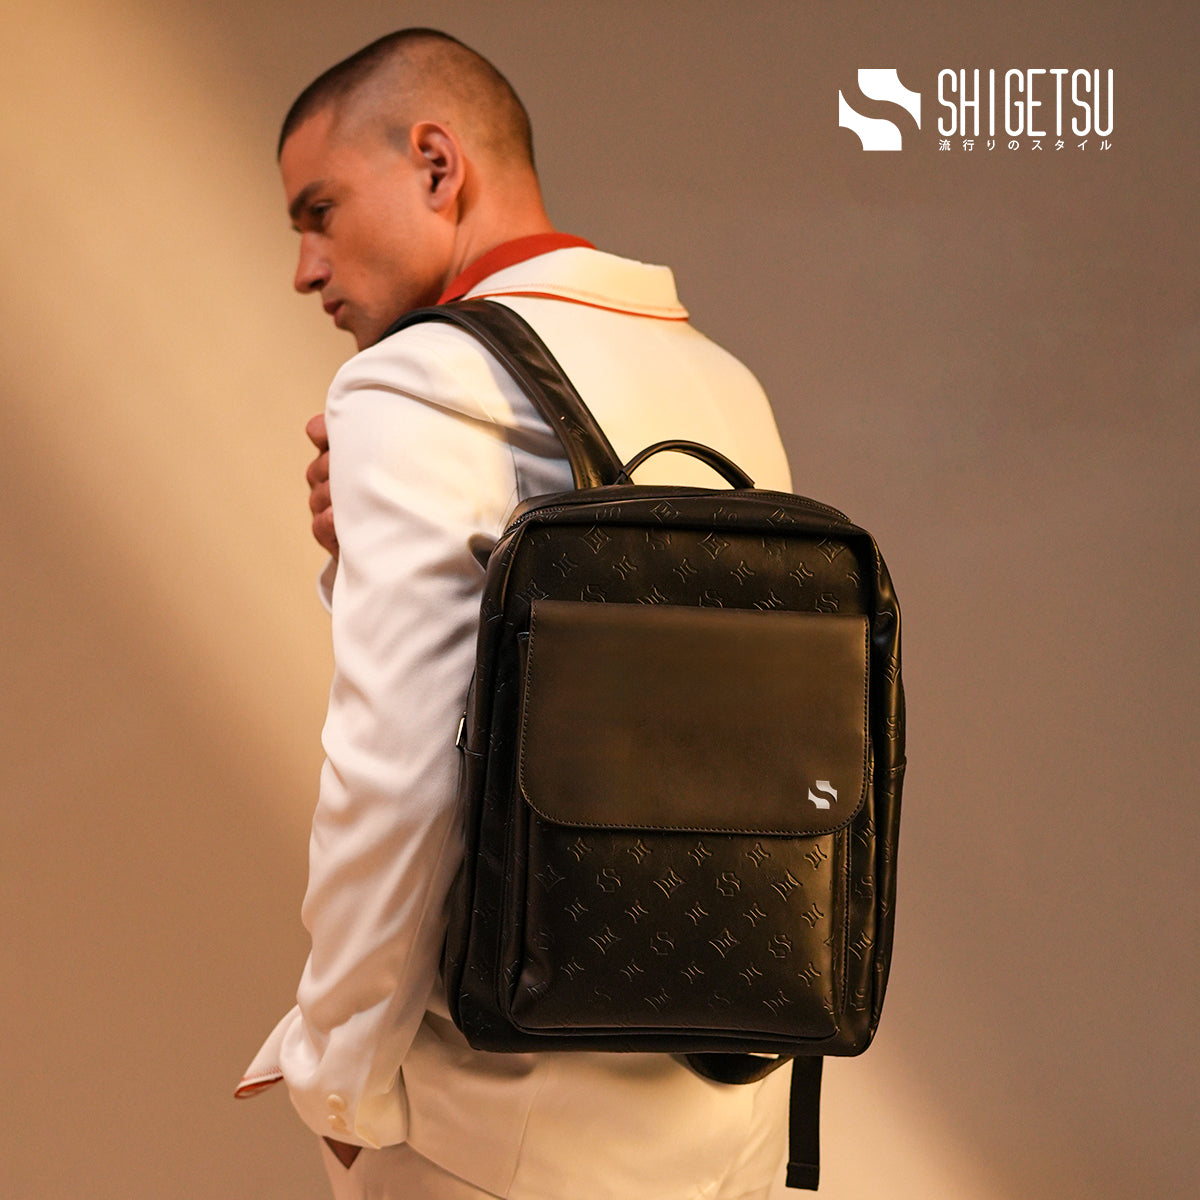 Shigetsu KOKUBU Debossed Monogram Bag Leather Backpack for School men